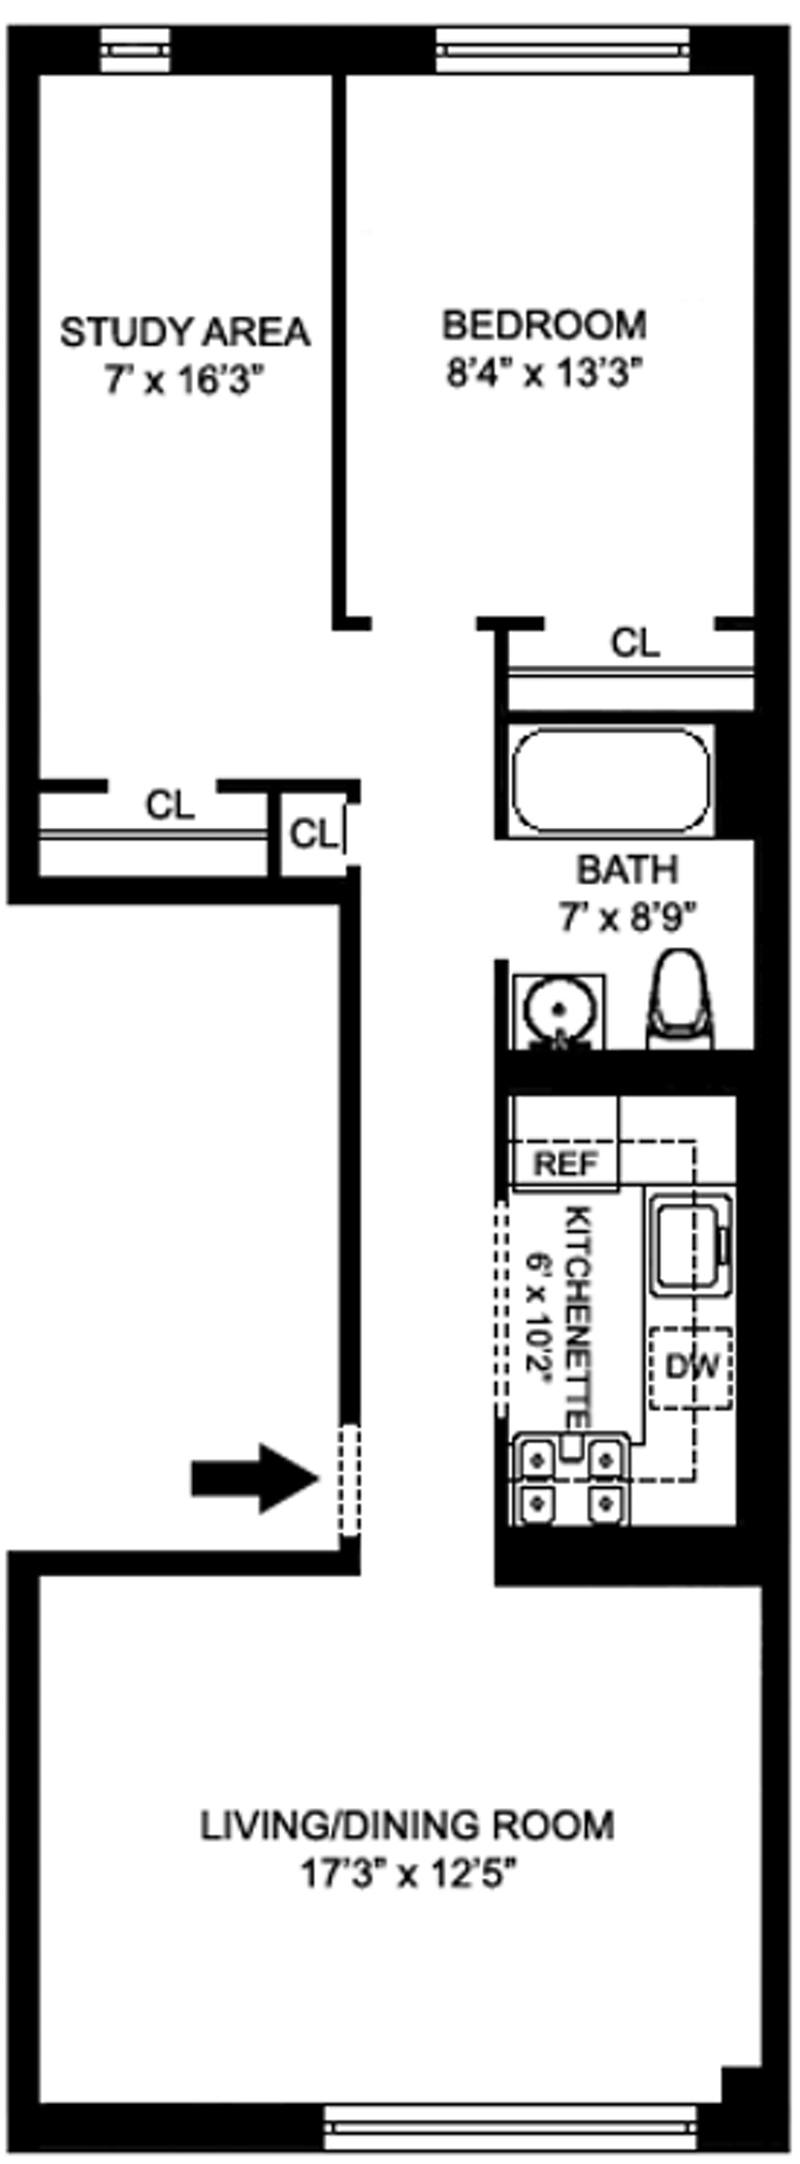 Floorplan for 115 West, 126th Street, 1